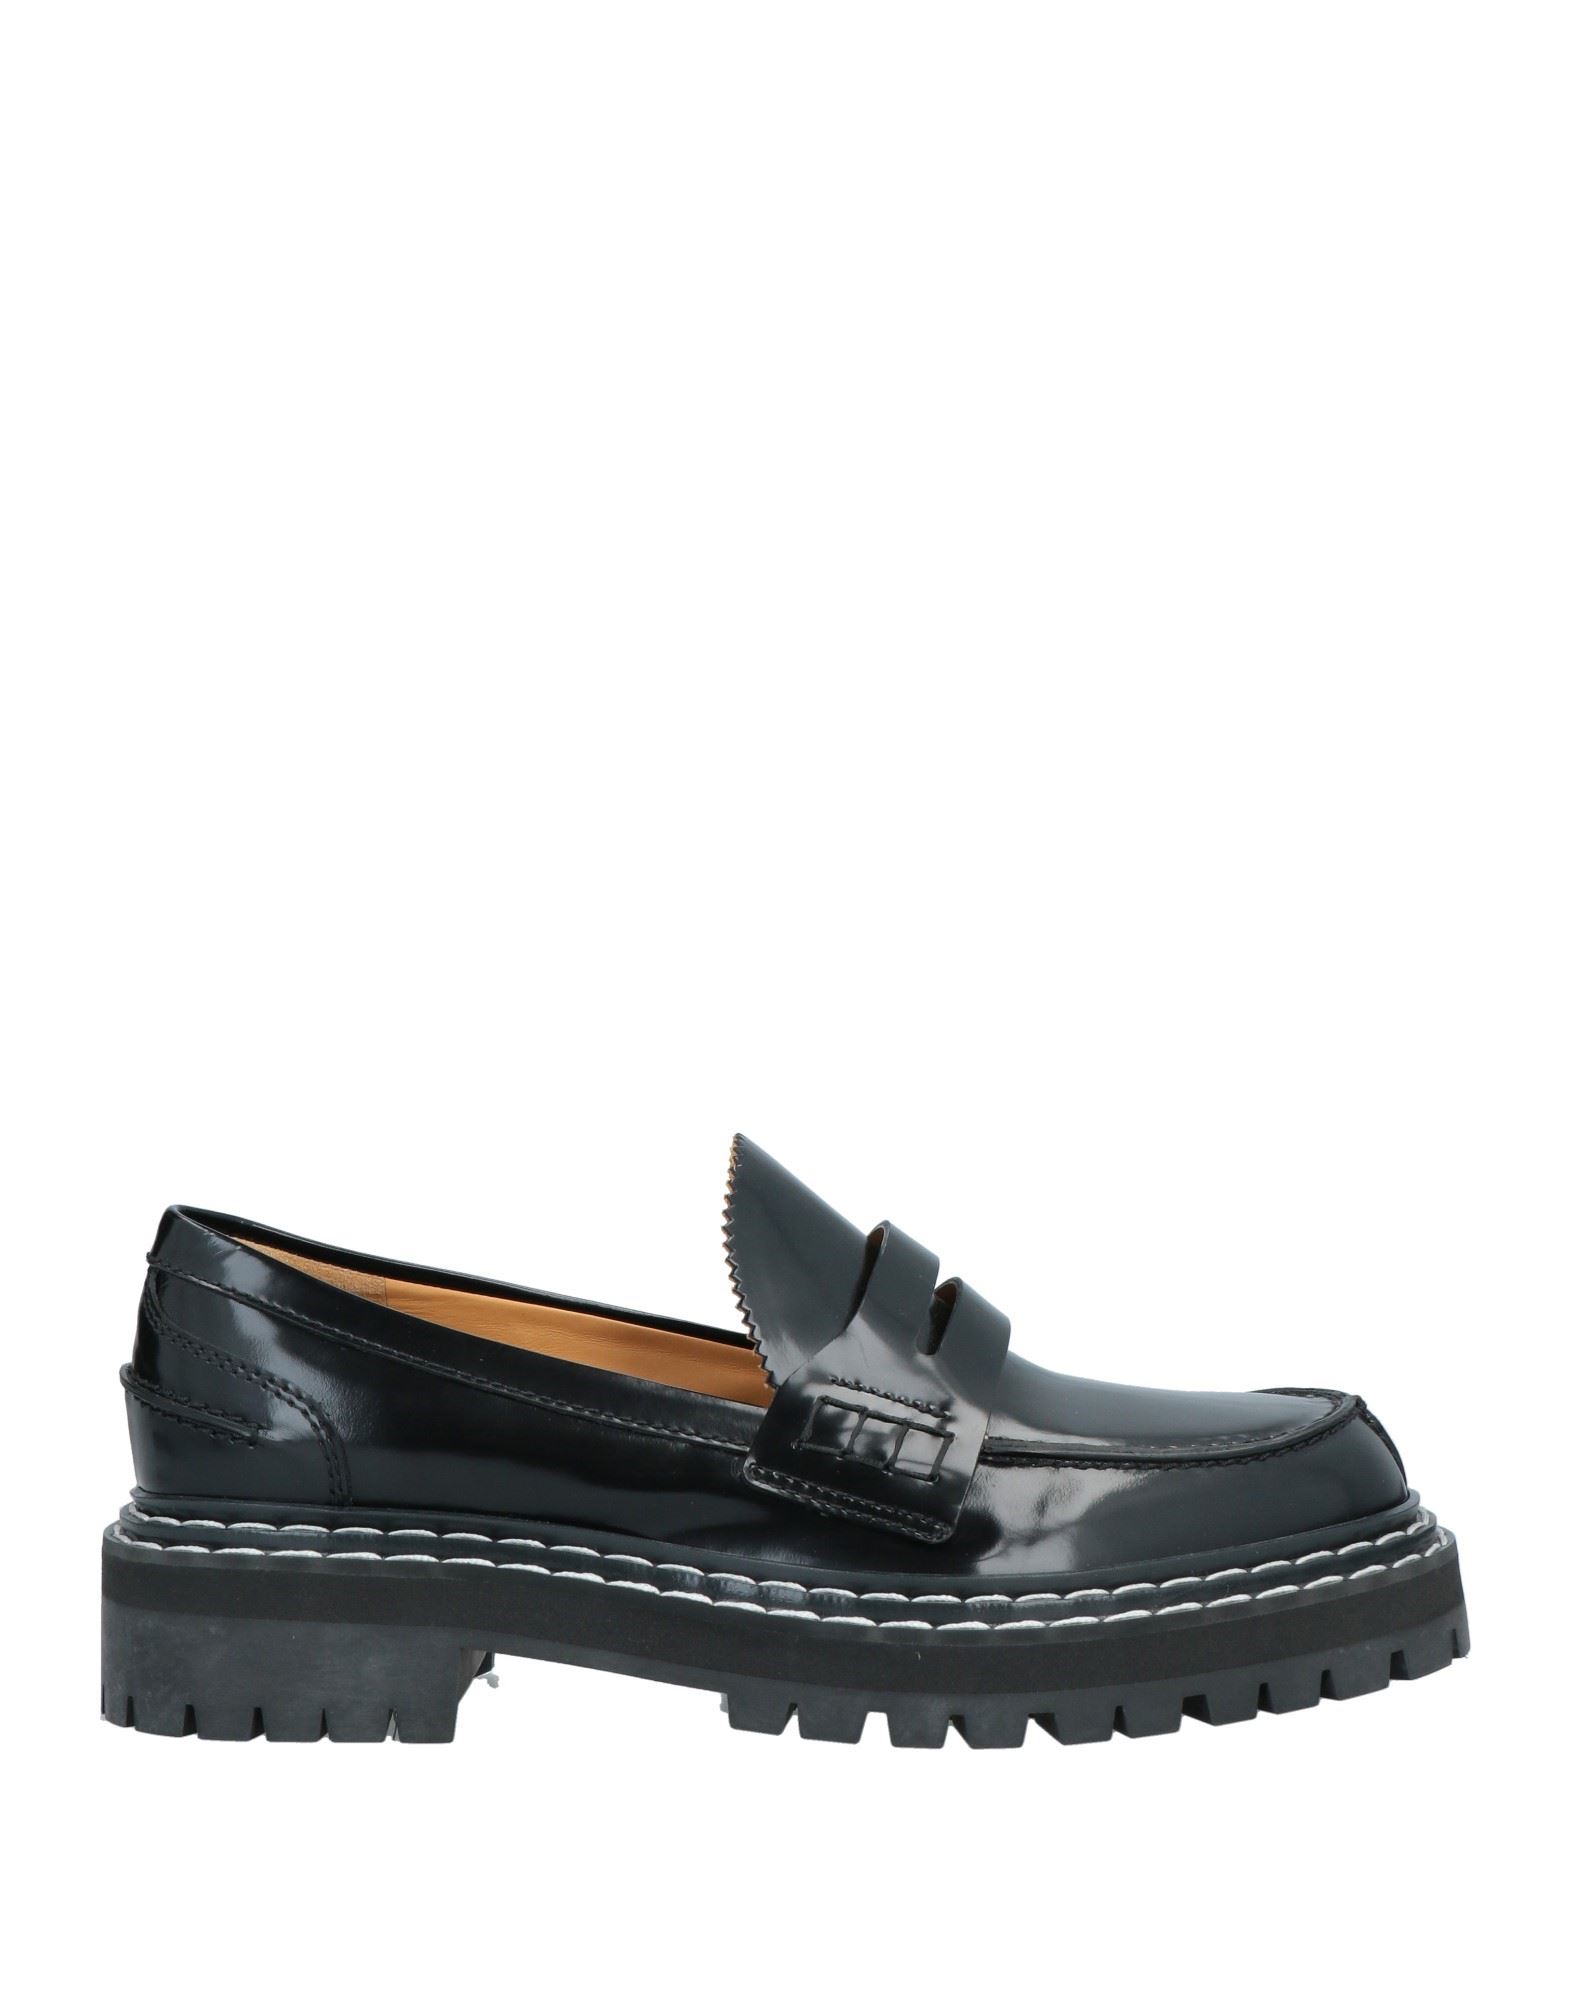 Proenza Schouler Loafers In Black